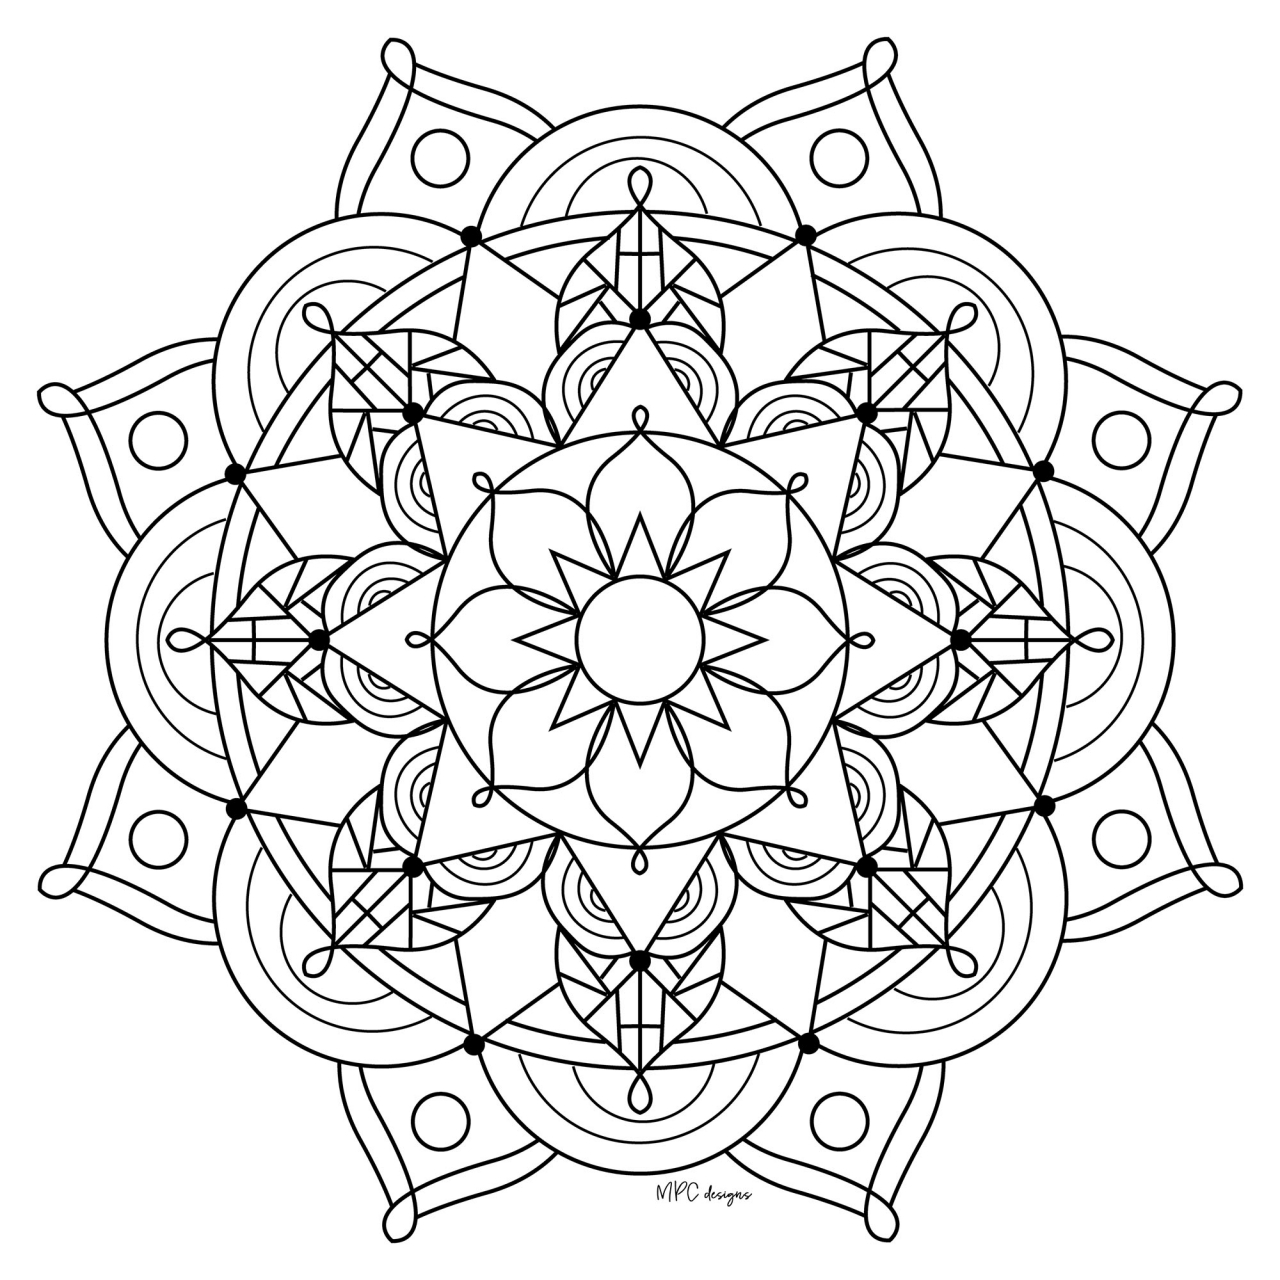 get-this-mandala-design-coloring-pages-7749c